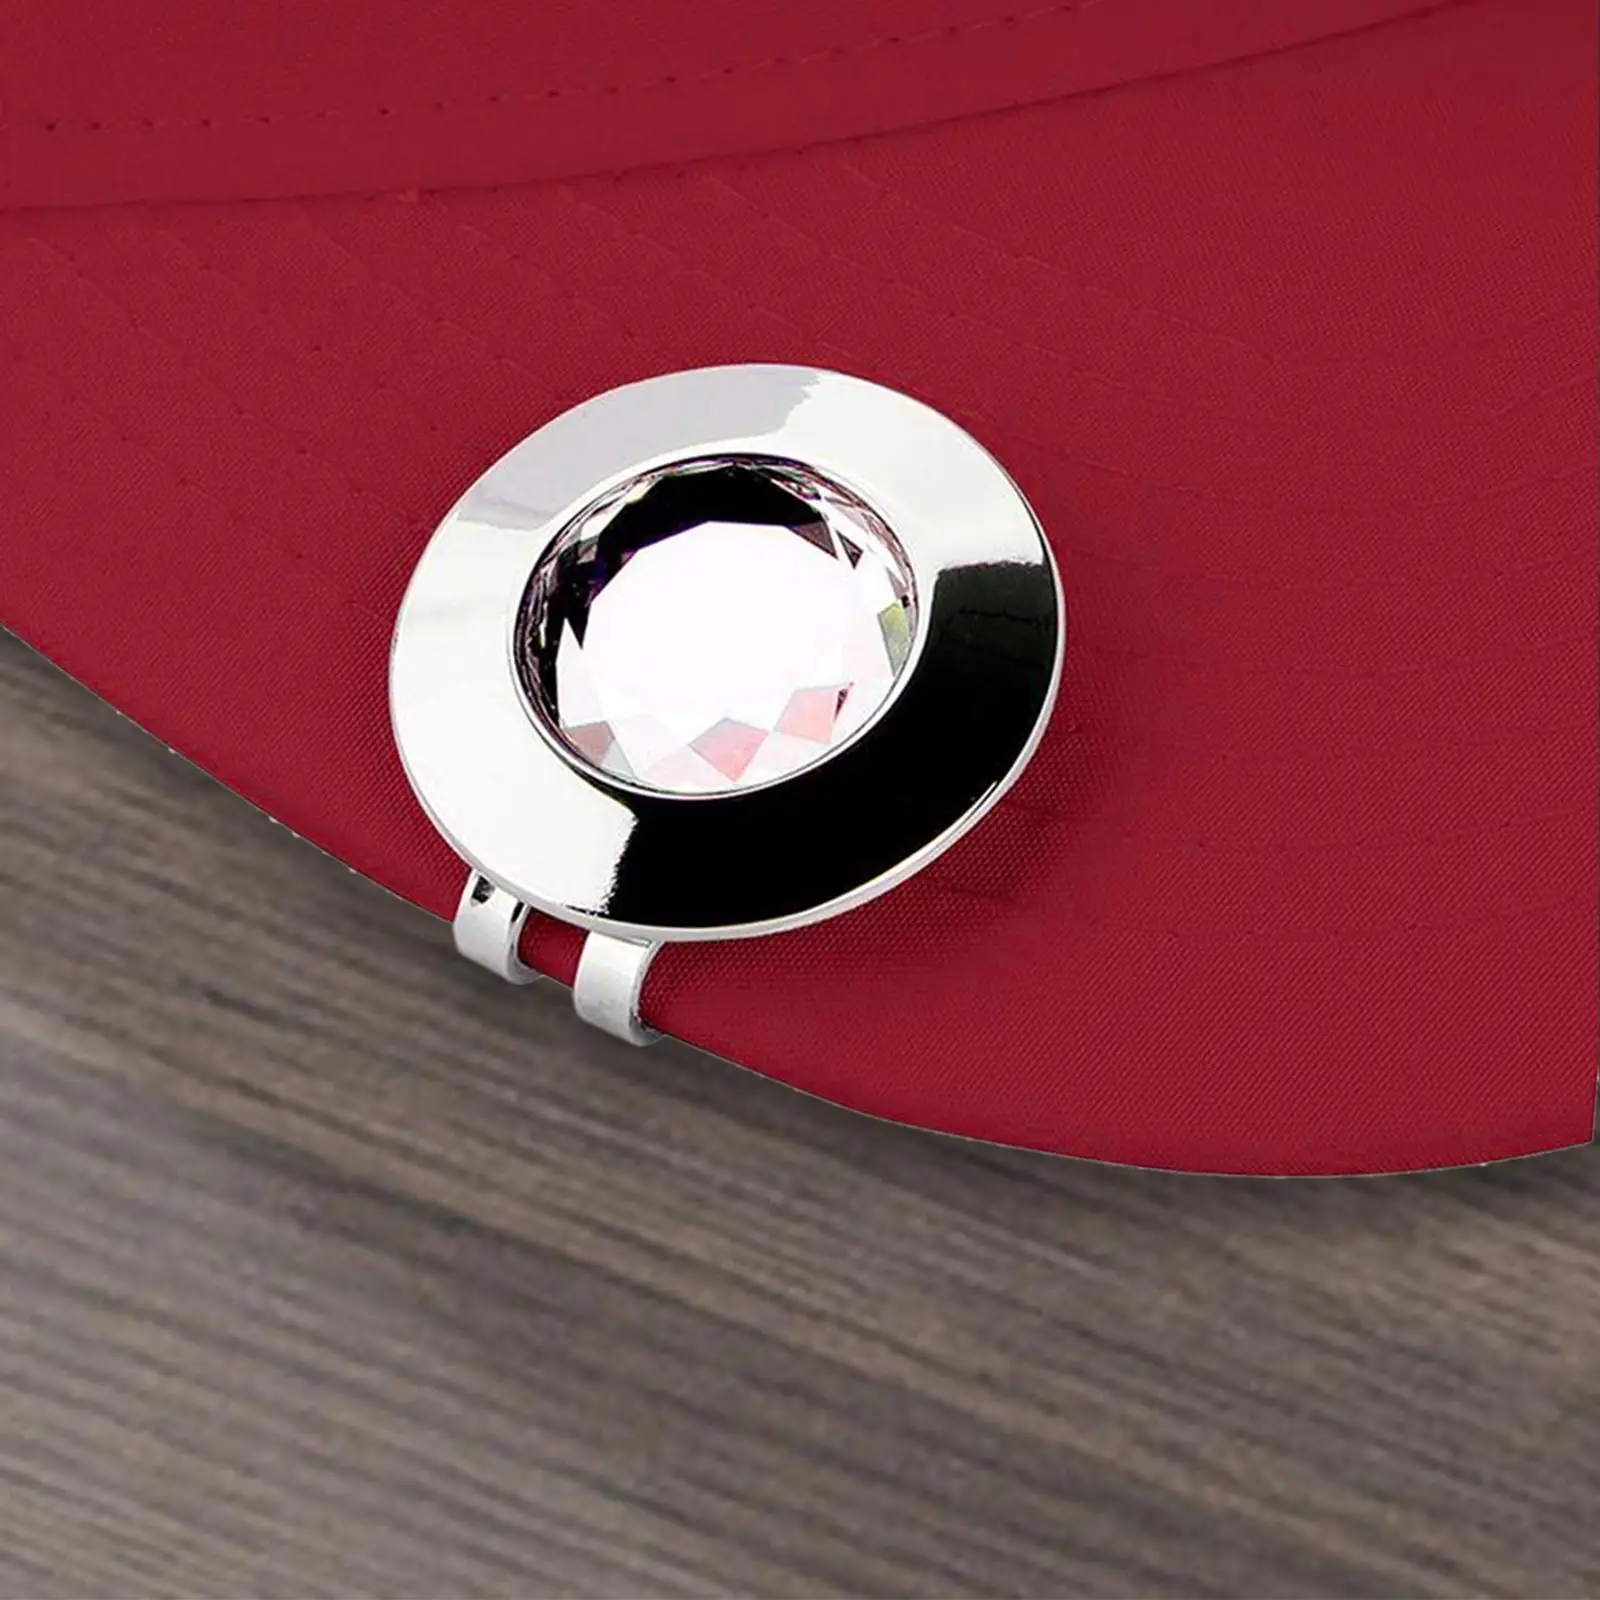 Golf Ball Marker Durable Golf Putting Aid Golf Accessories Stylish No Hat Clip